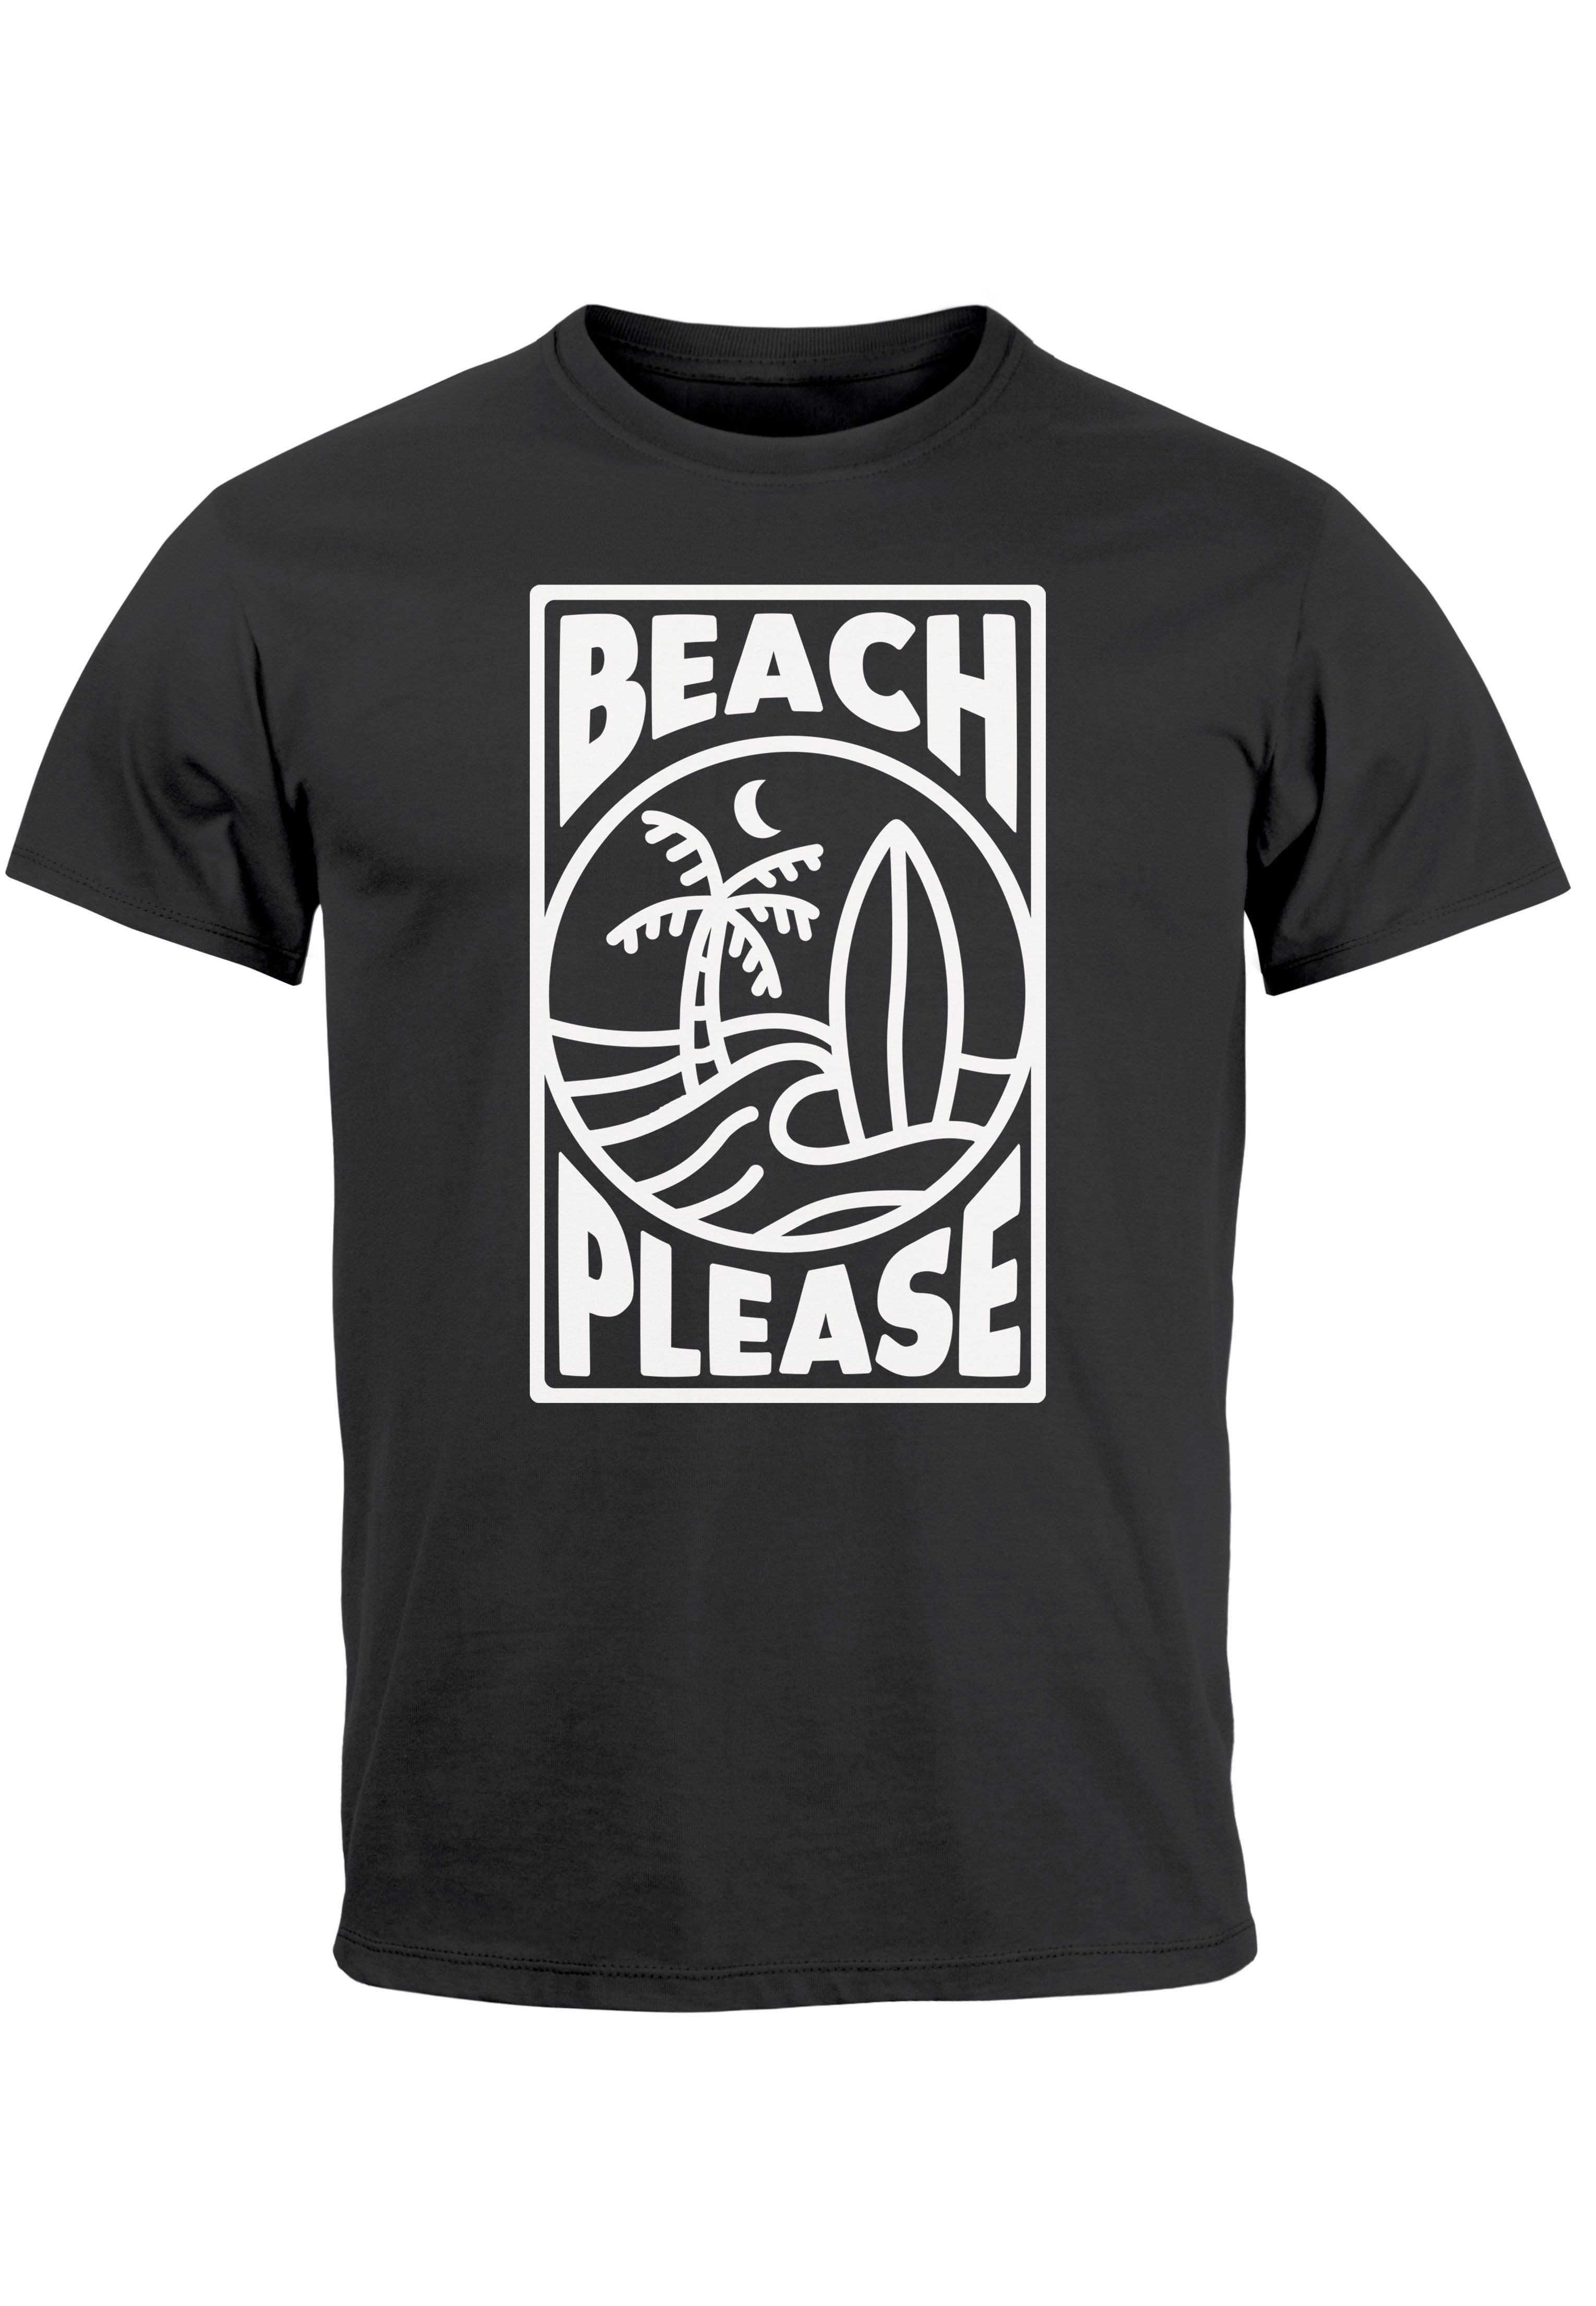 Neverless Print-Shirt Herren T-Shirt Beach Please Surfing Surfboard Wave Welle Sommer Print mit Print dunkelgrau